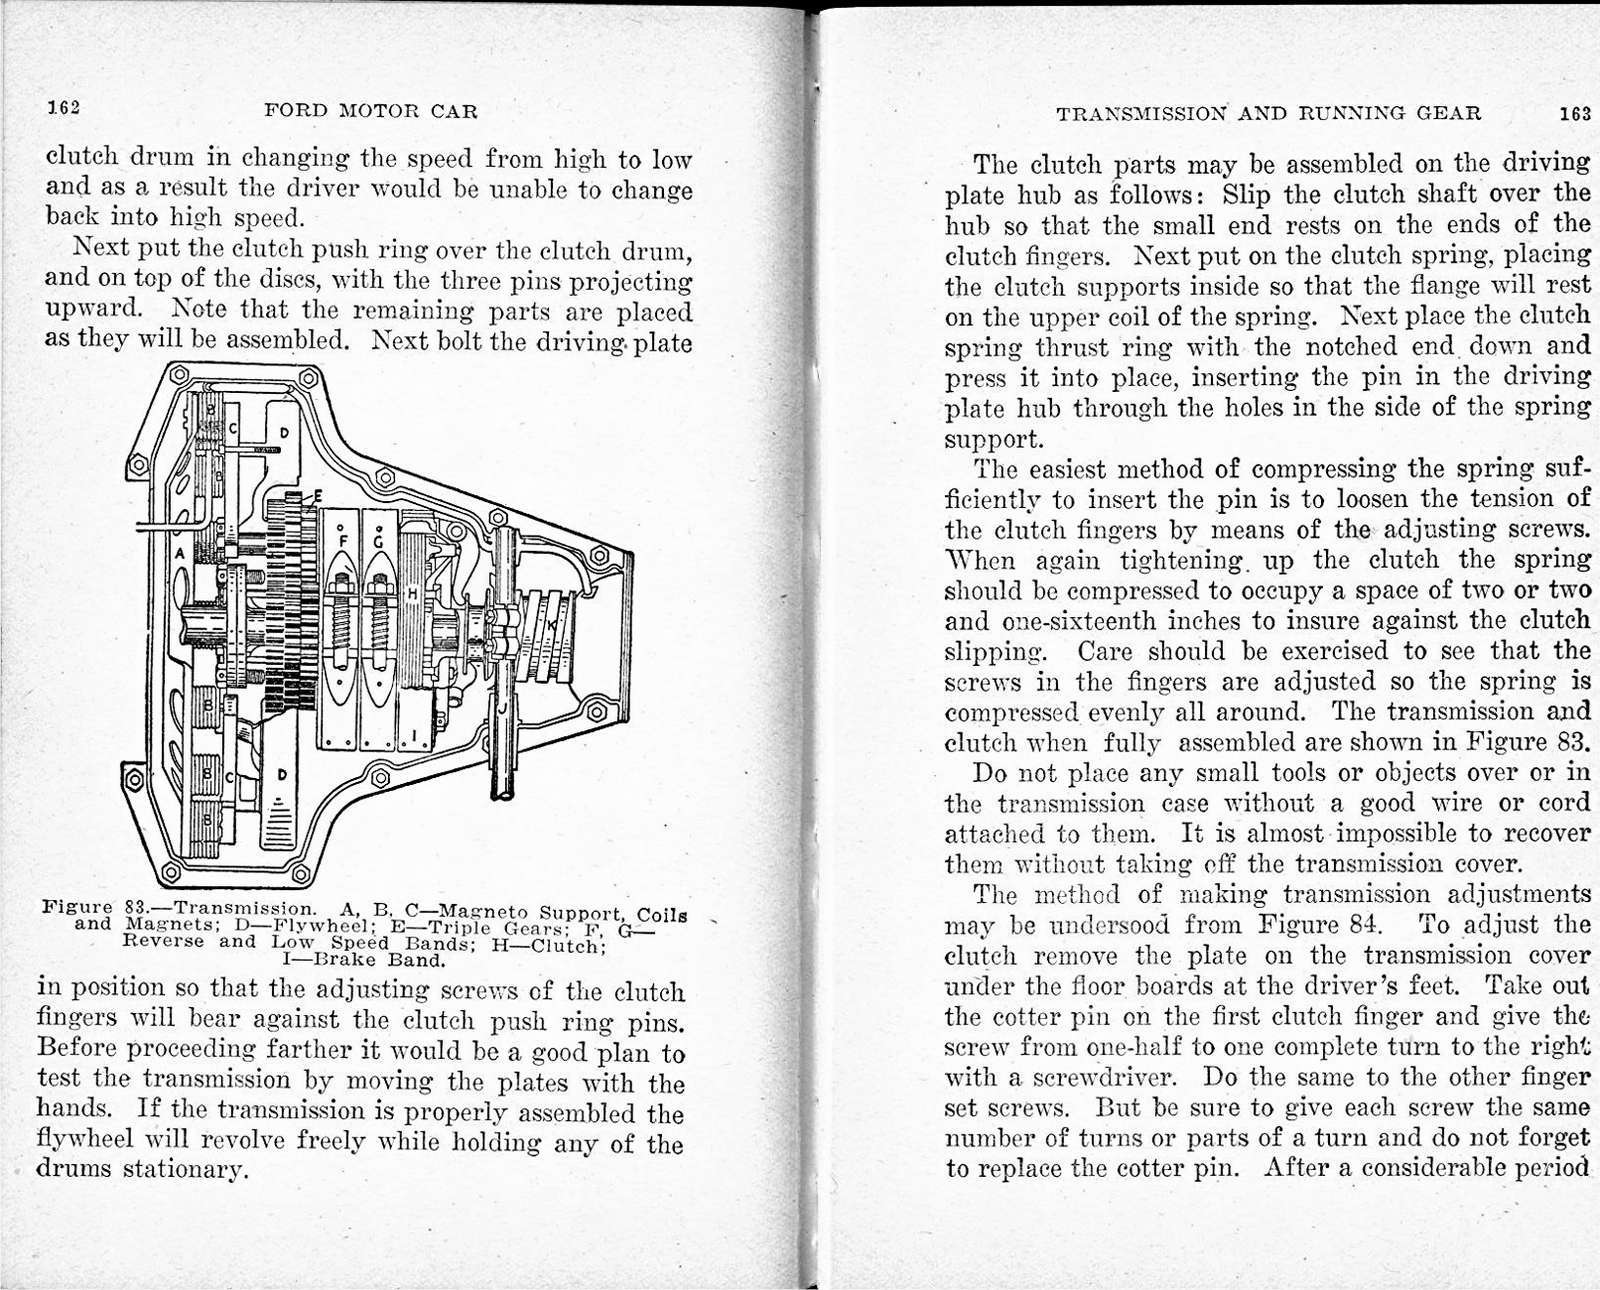 n_1917 Ford Car & Truck Manual-162-163.jpg